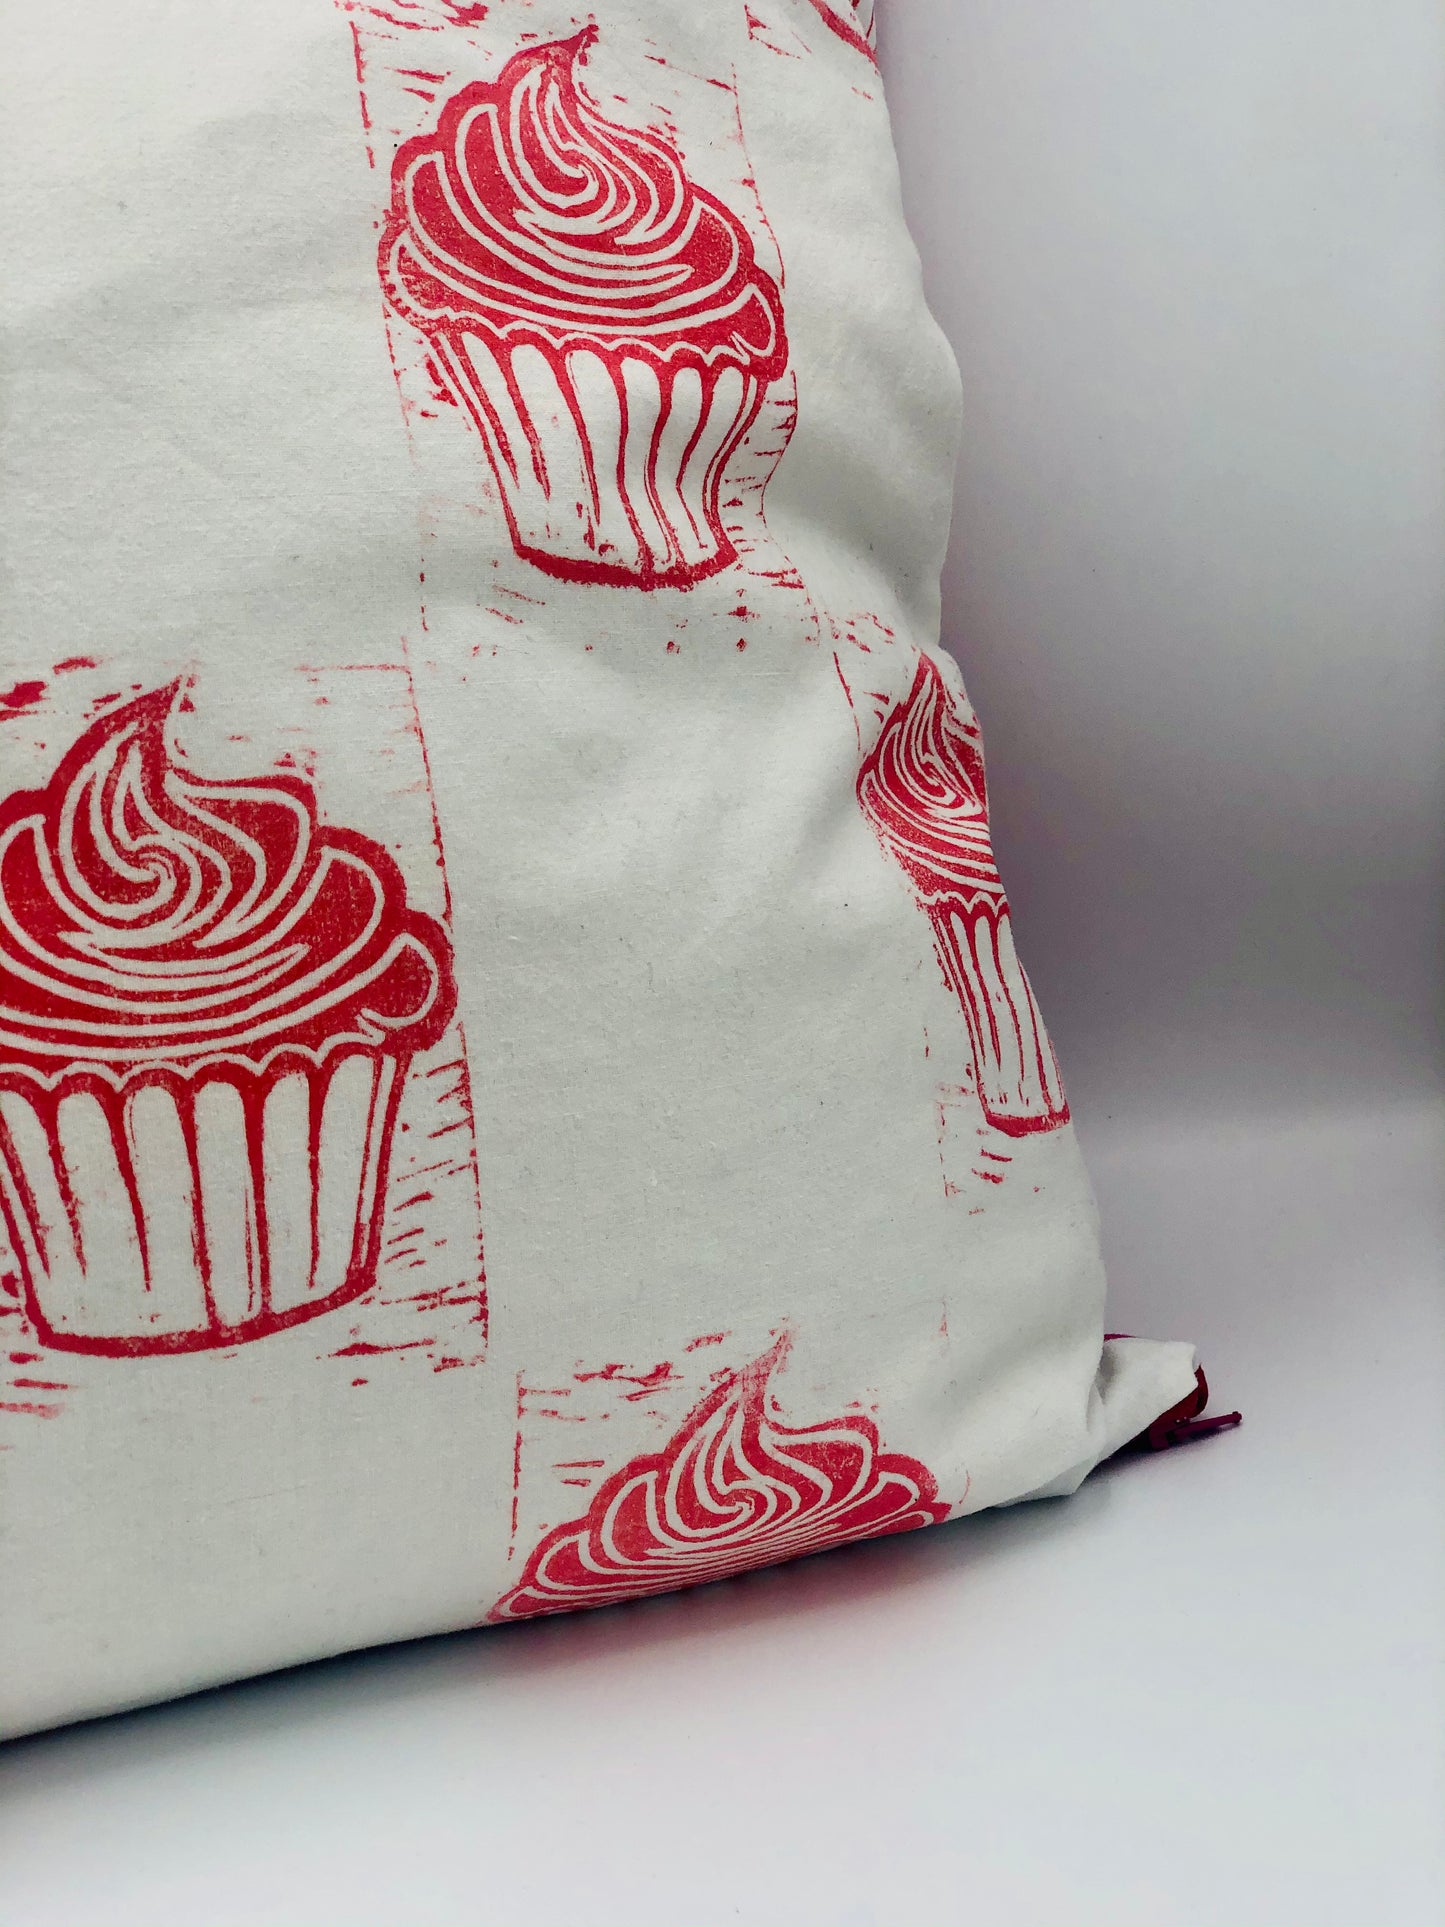 Hand printed Cupcake fabric Cushion Cover